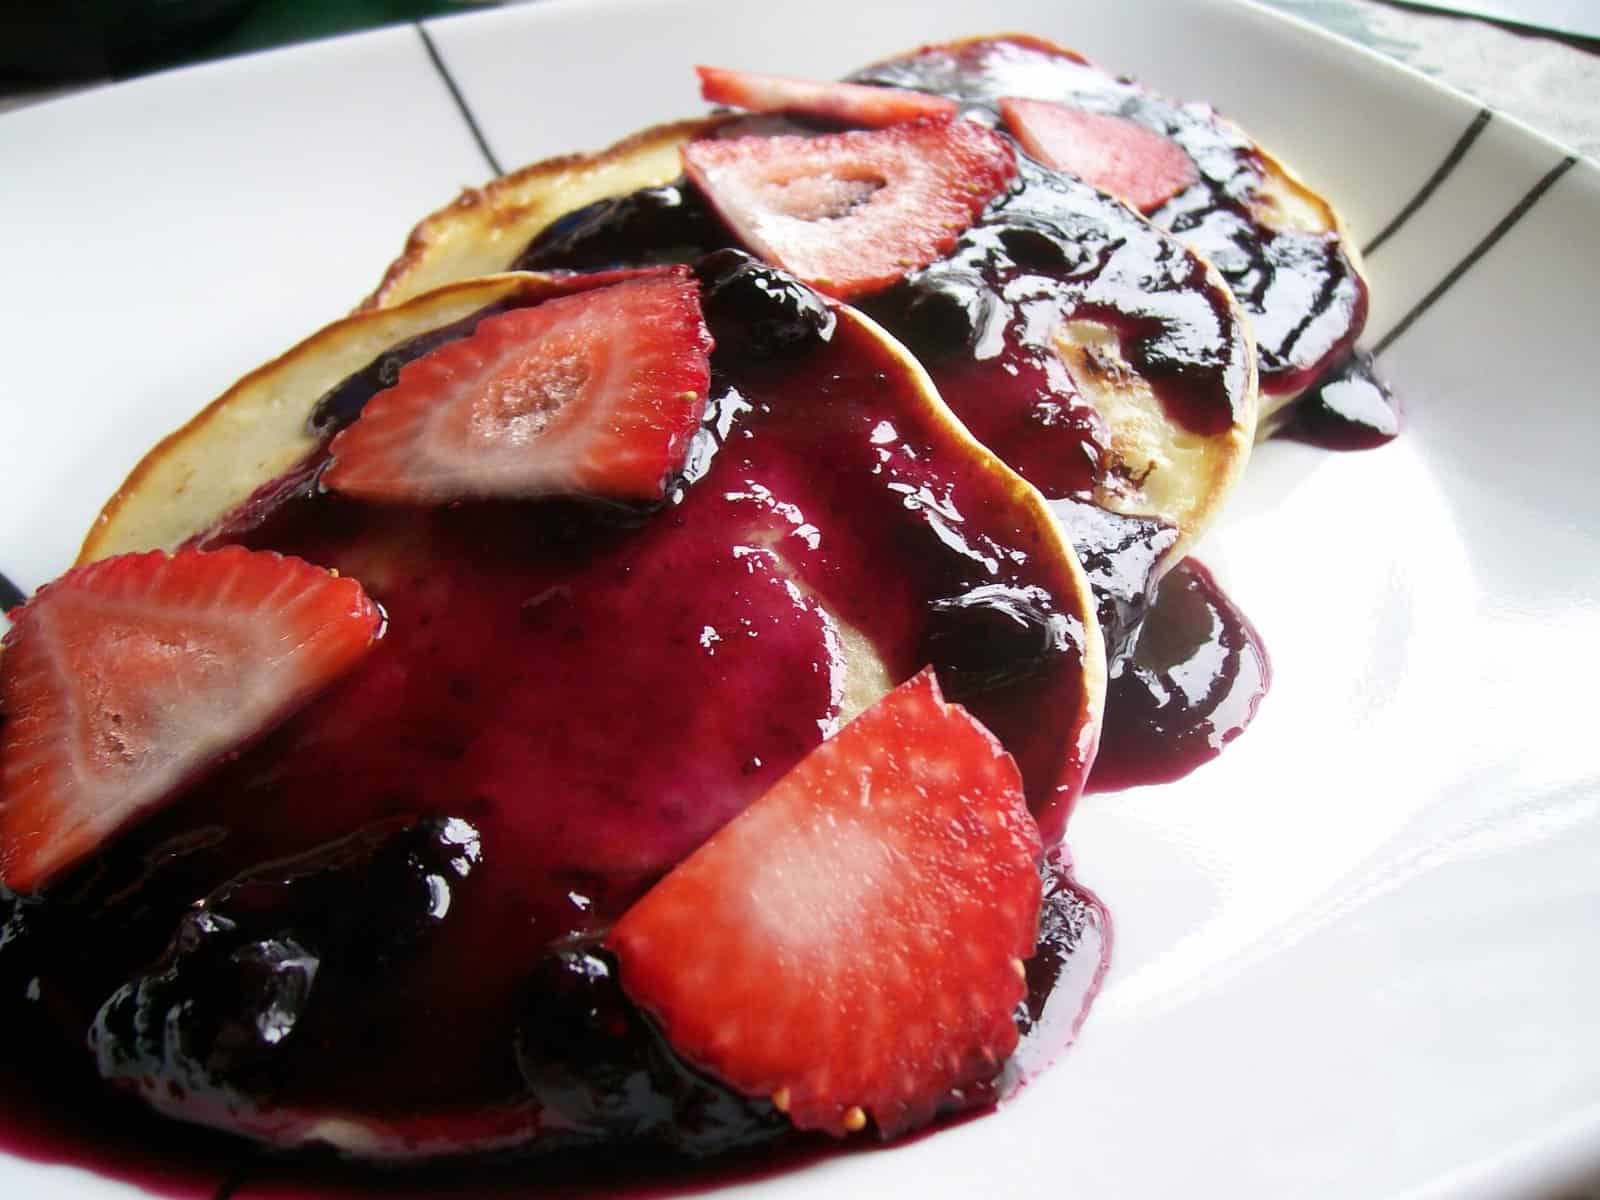 Weight Watchers Blueberry Pancake/Waffle Syrup (0 Ww Points!) Recipe